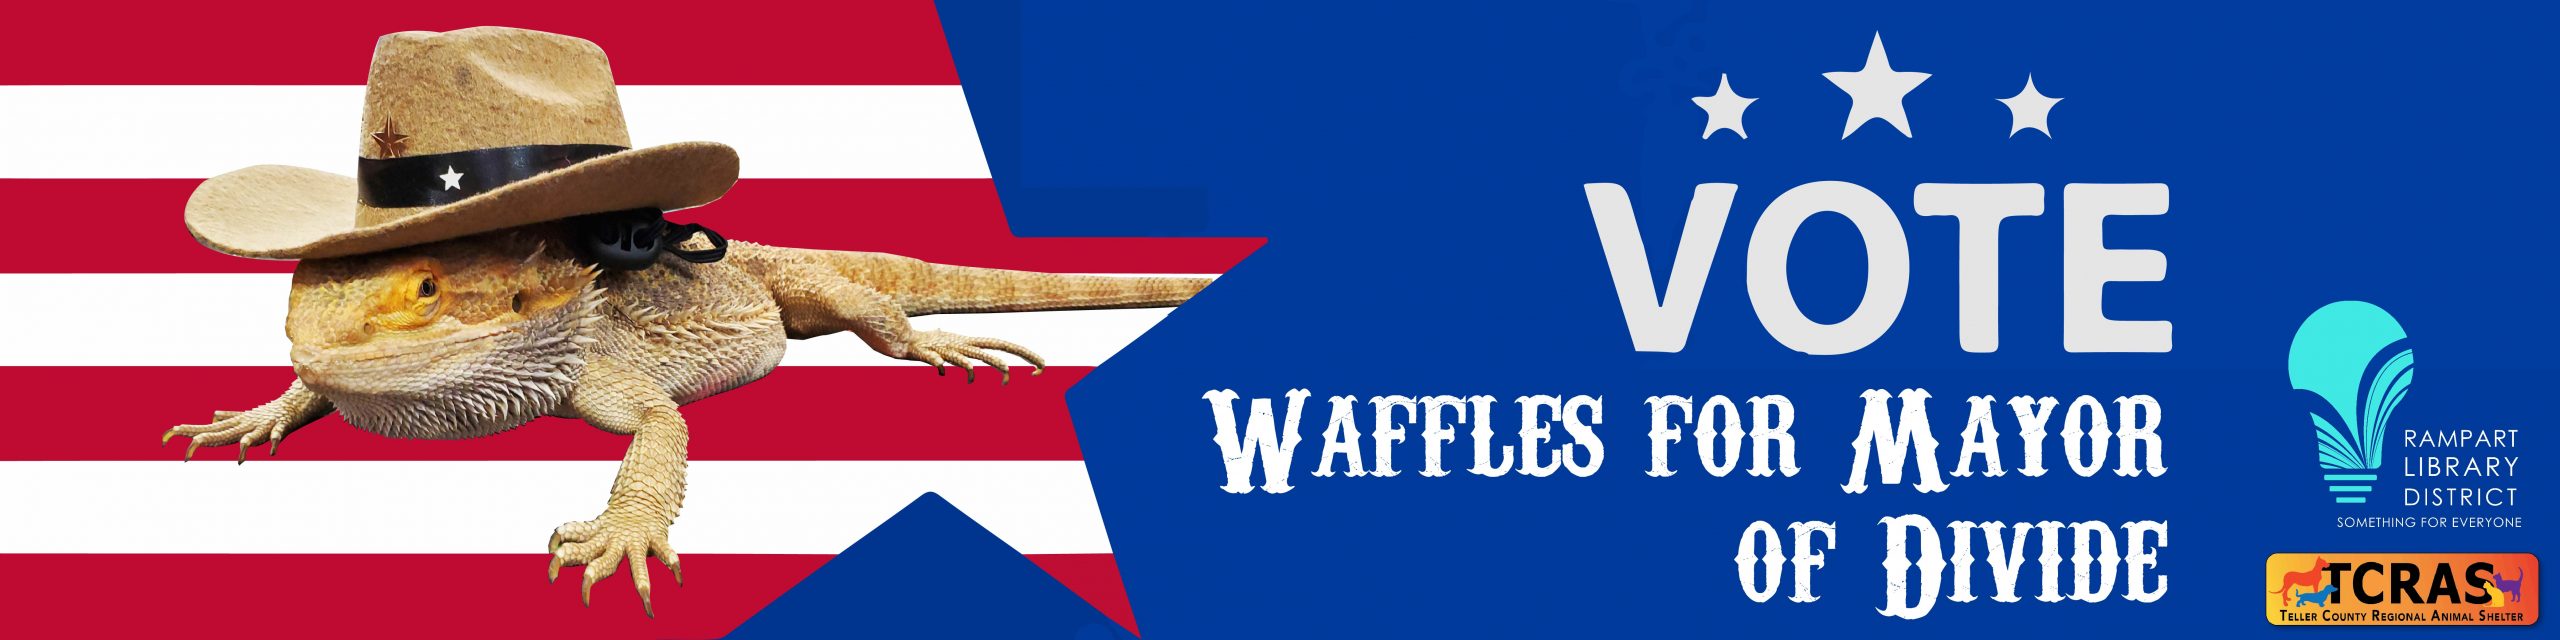 waffles for mayor at givegrove.com